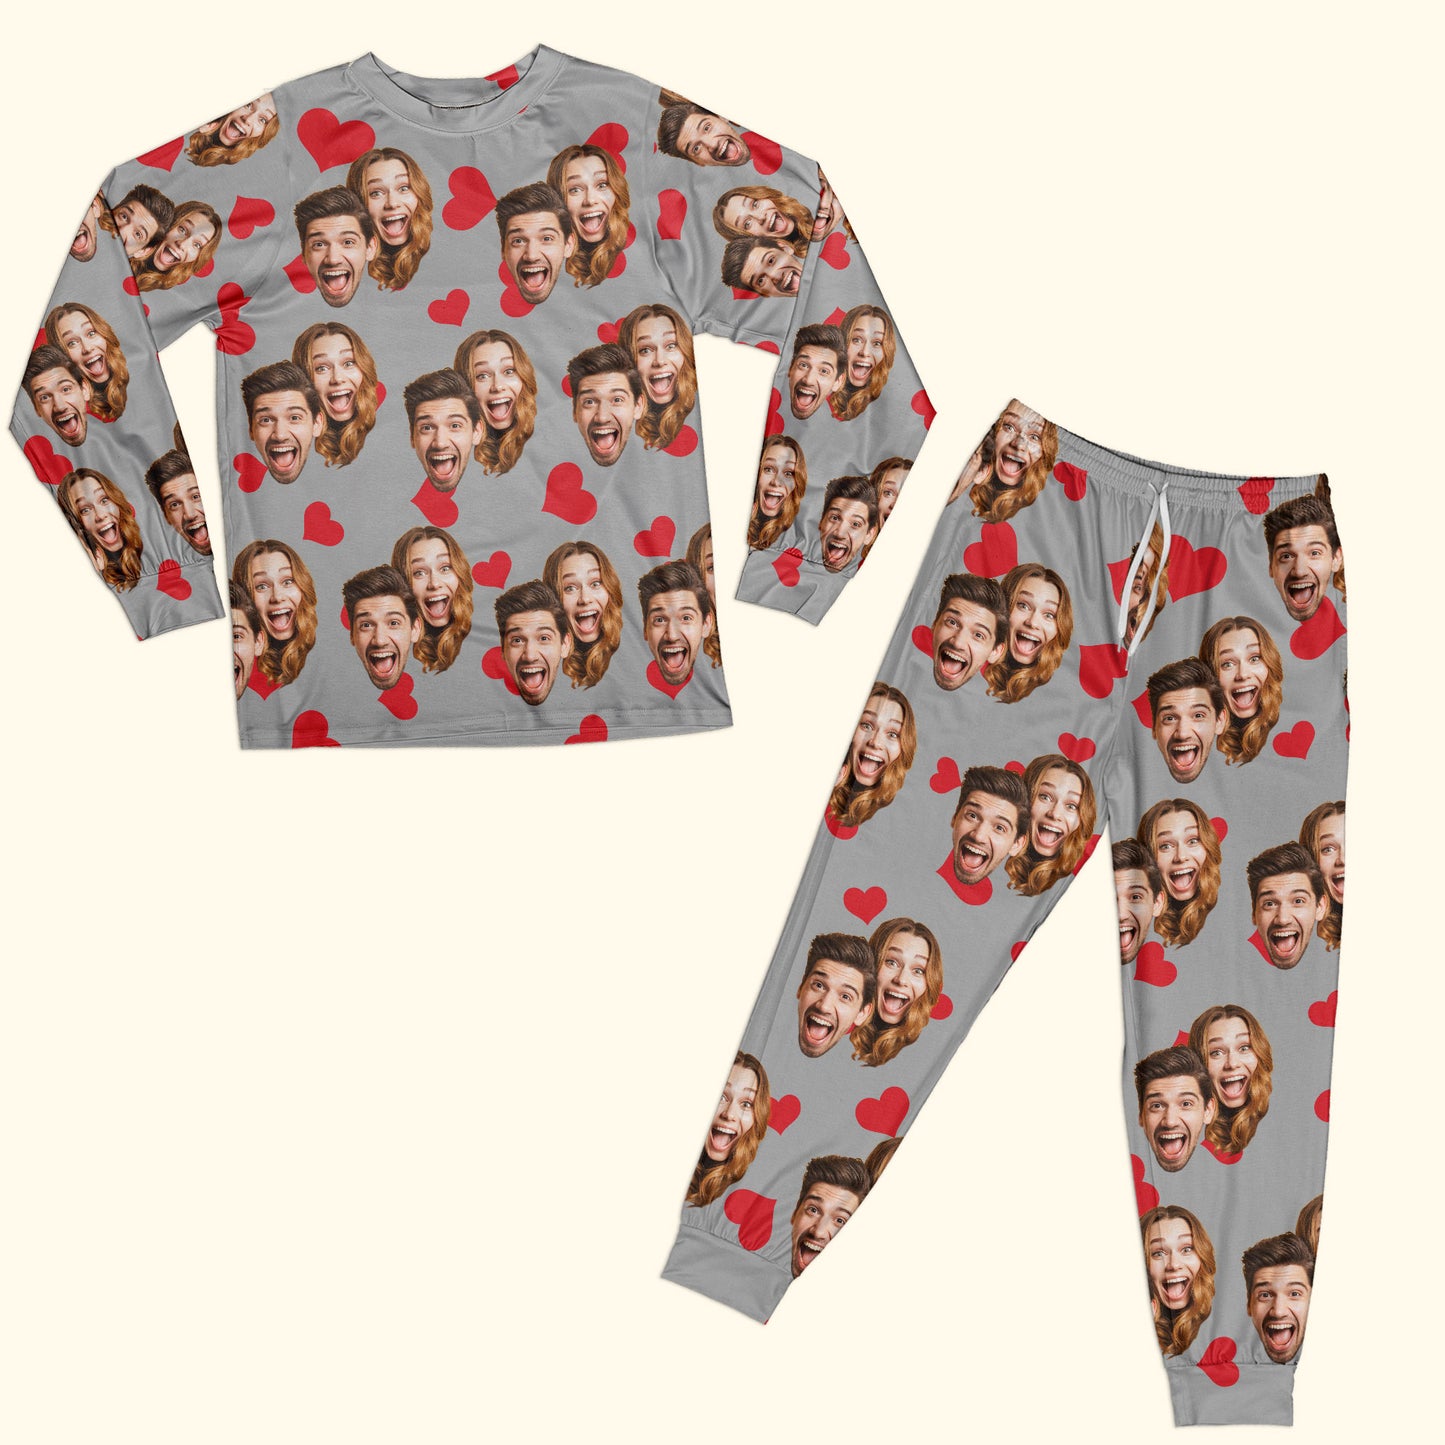 I Love You  - Personalized Photo Pajamas